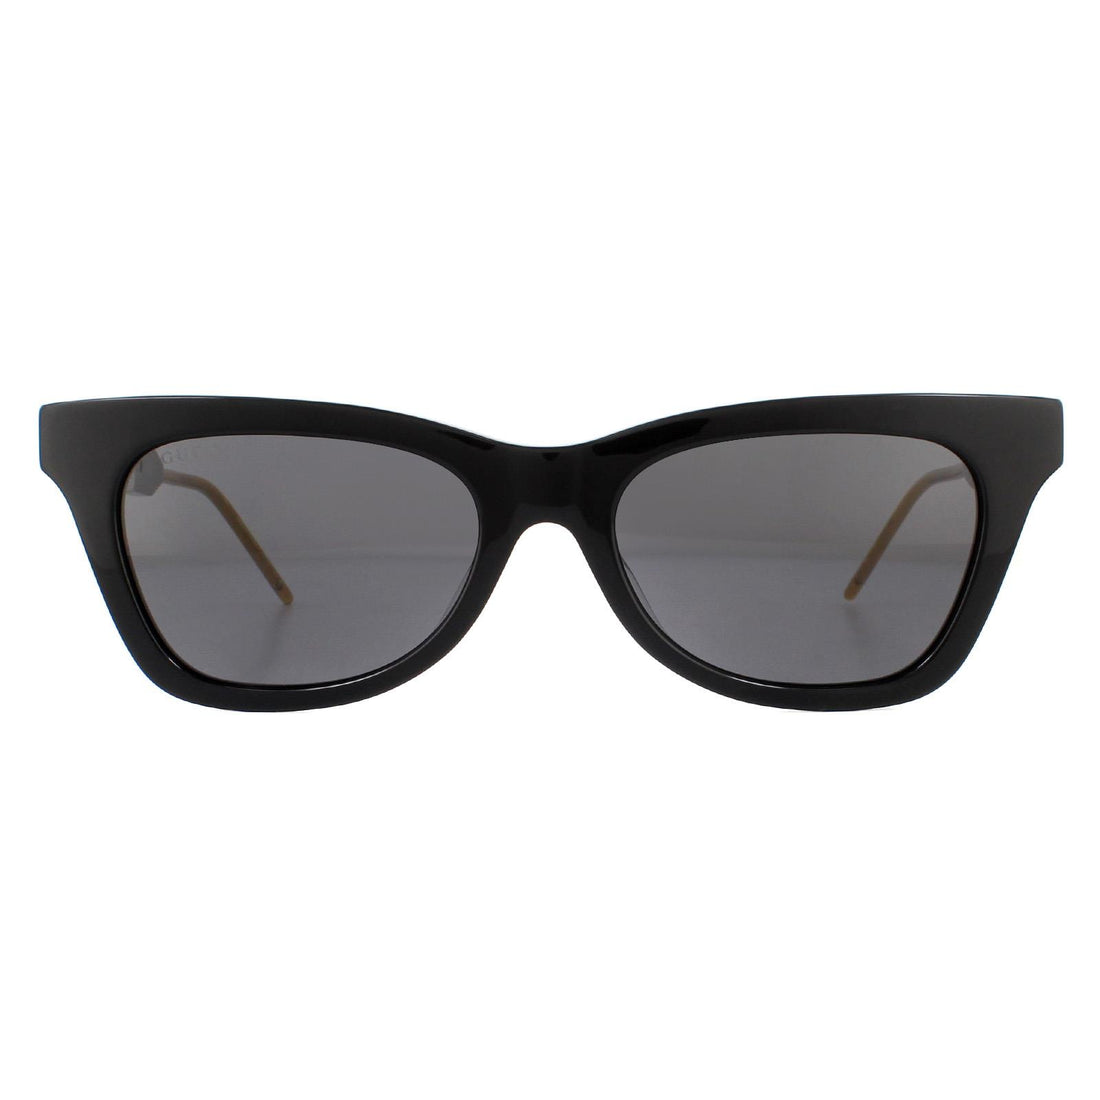 Gucci Sunglasses GG0598S 001 Black and Gold Grey